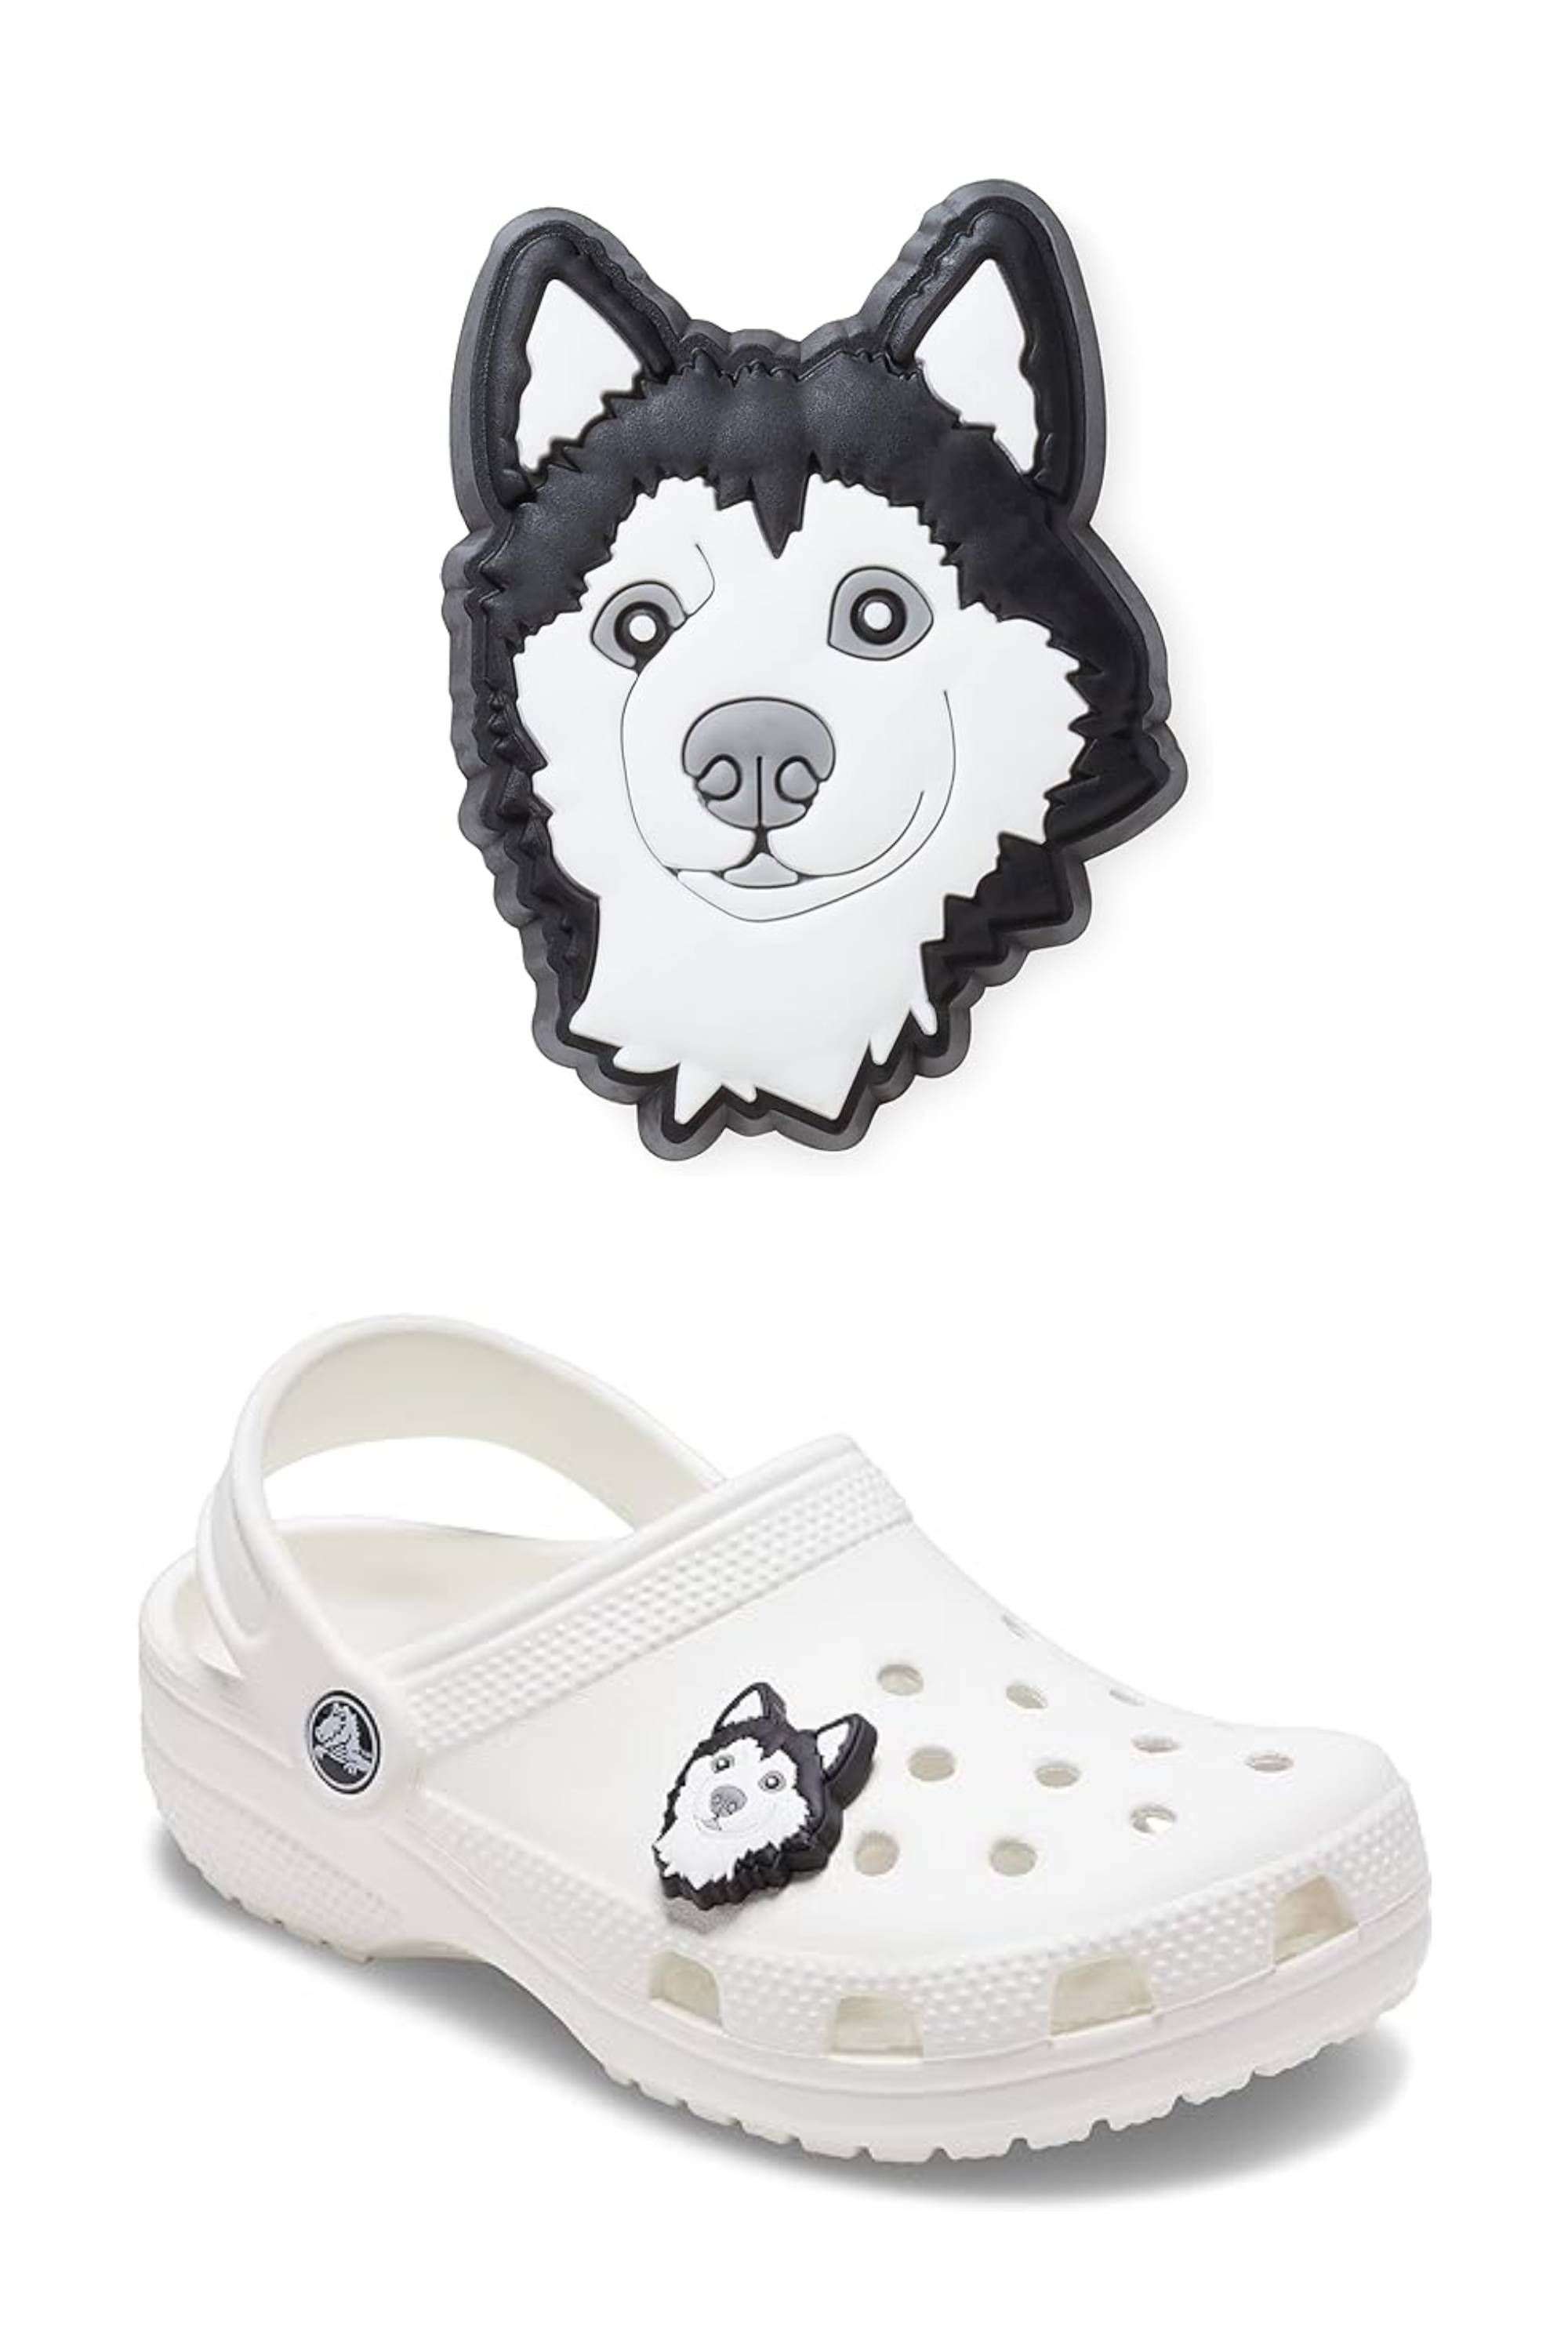 Crocs Jibbitz Shoe Charms - Husky Dog Single